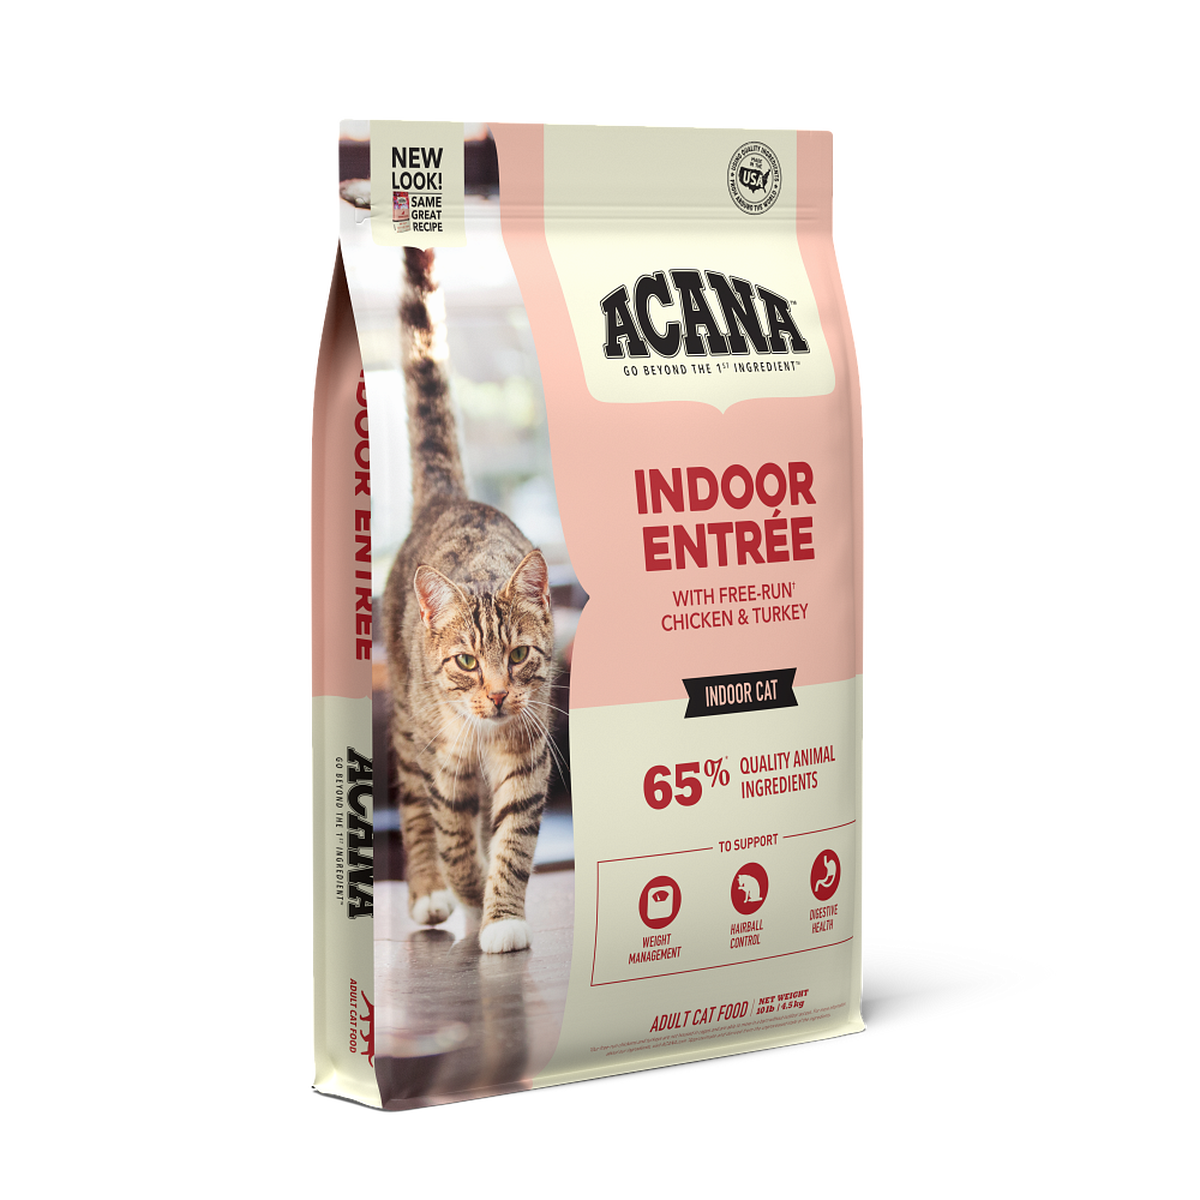 Is Acana Cat Food Good?